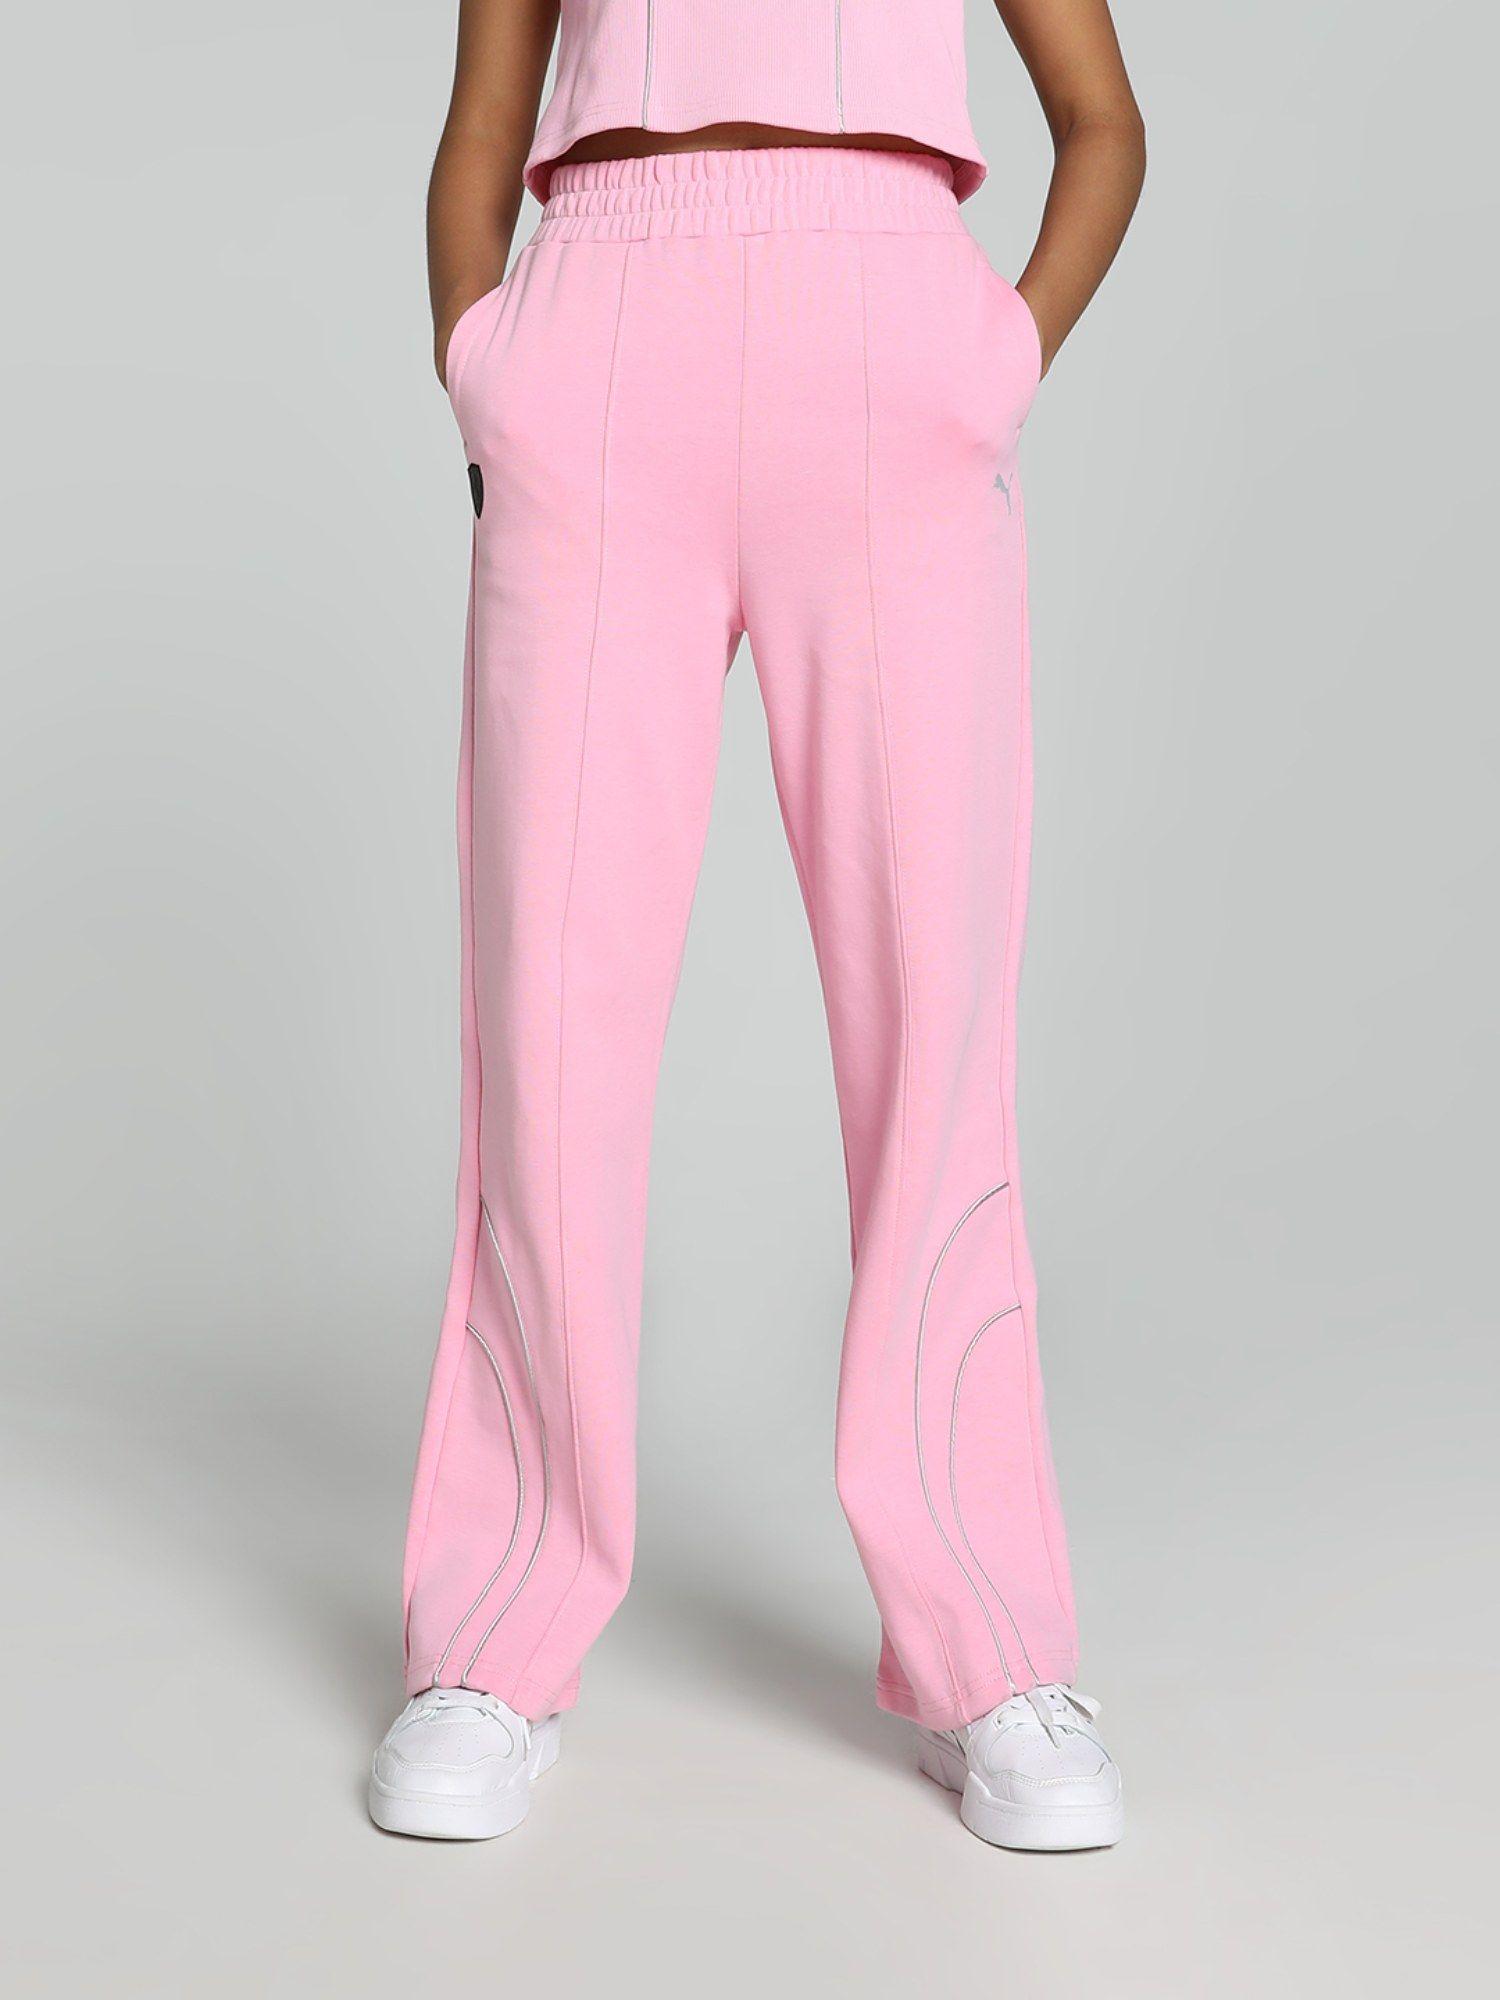 ferrari style womens pink track pant